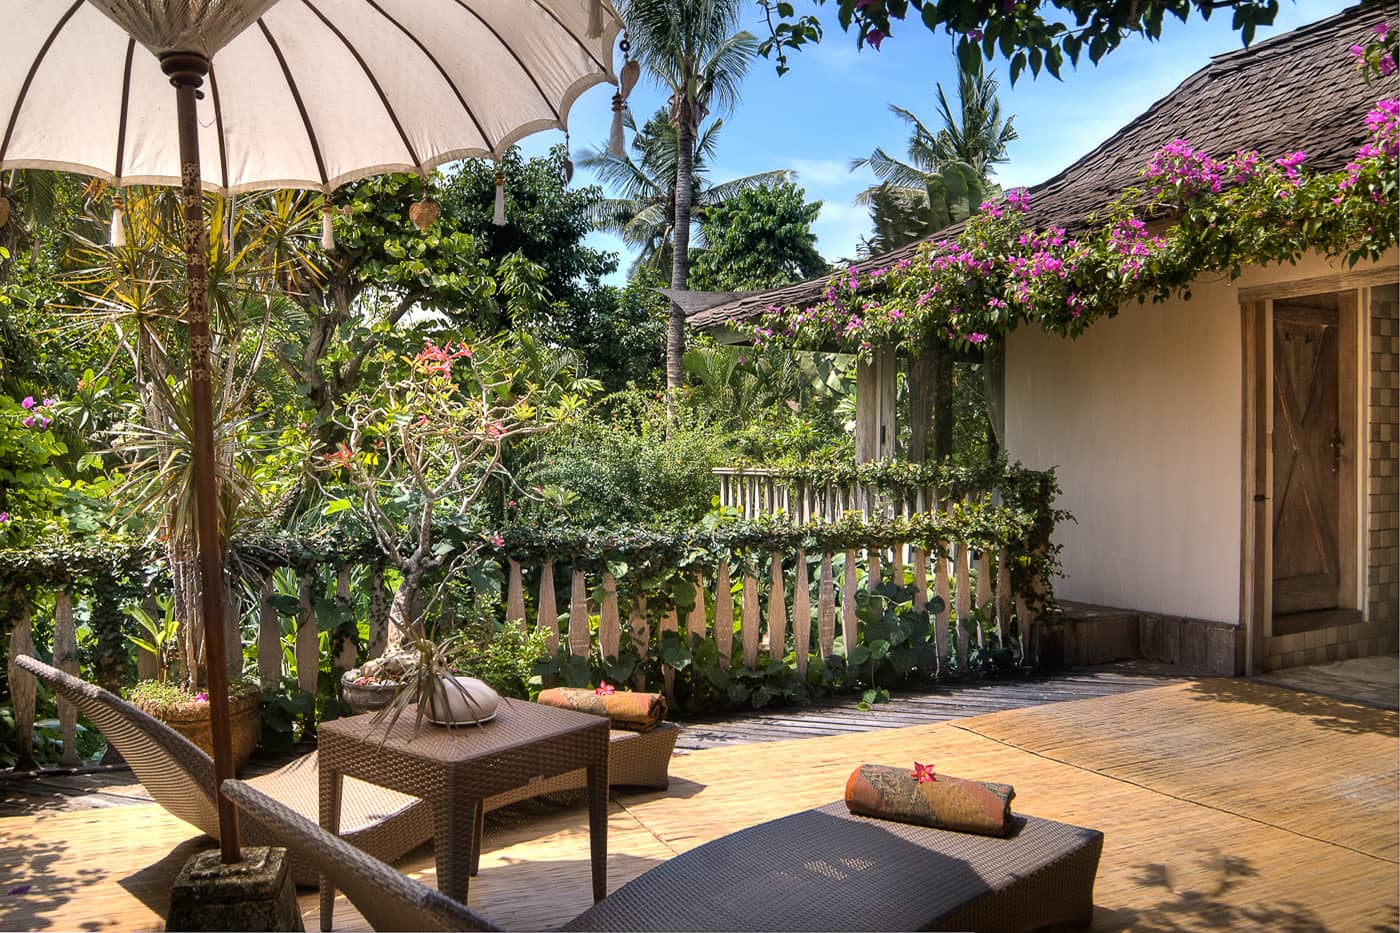 Villa Istimewa photos in Seminyak Bali